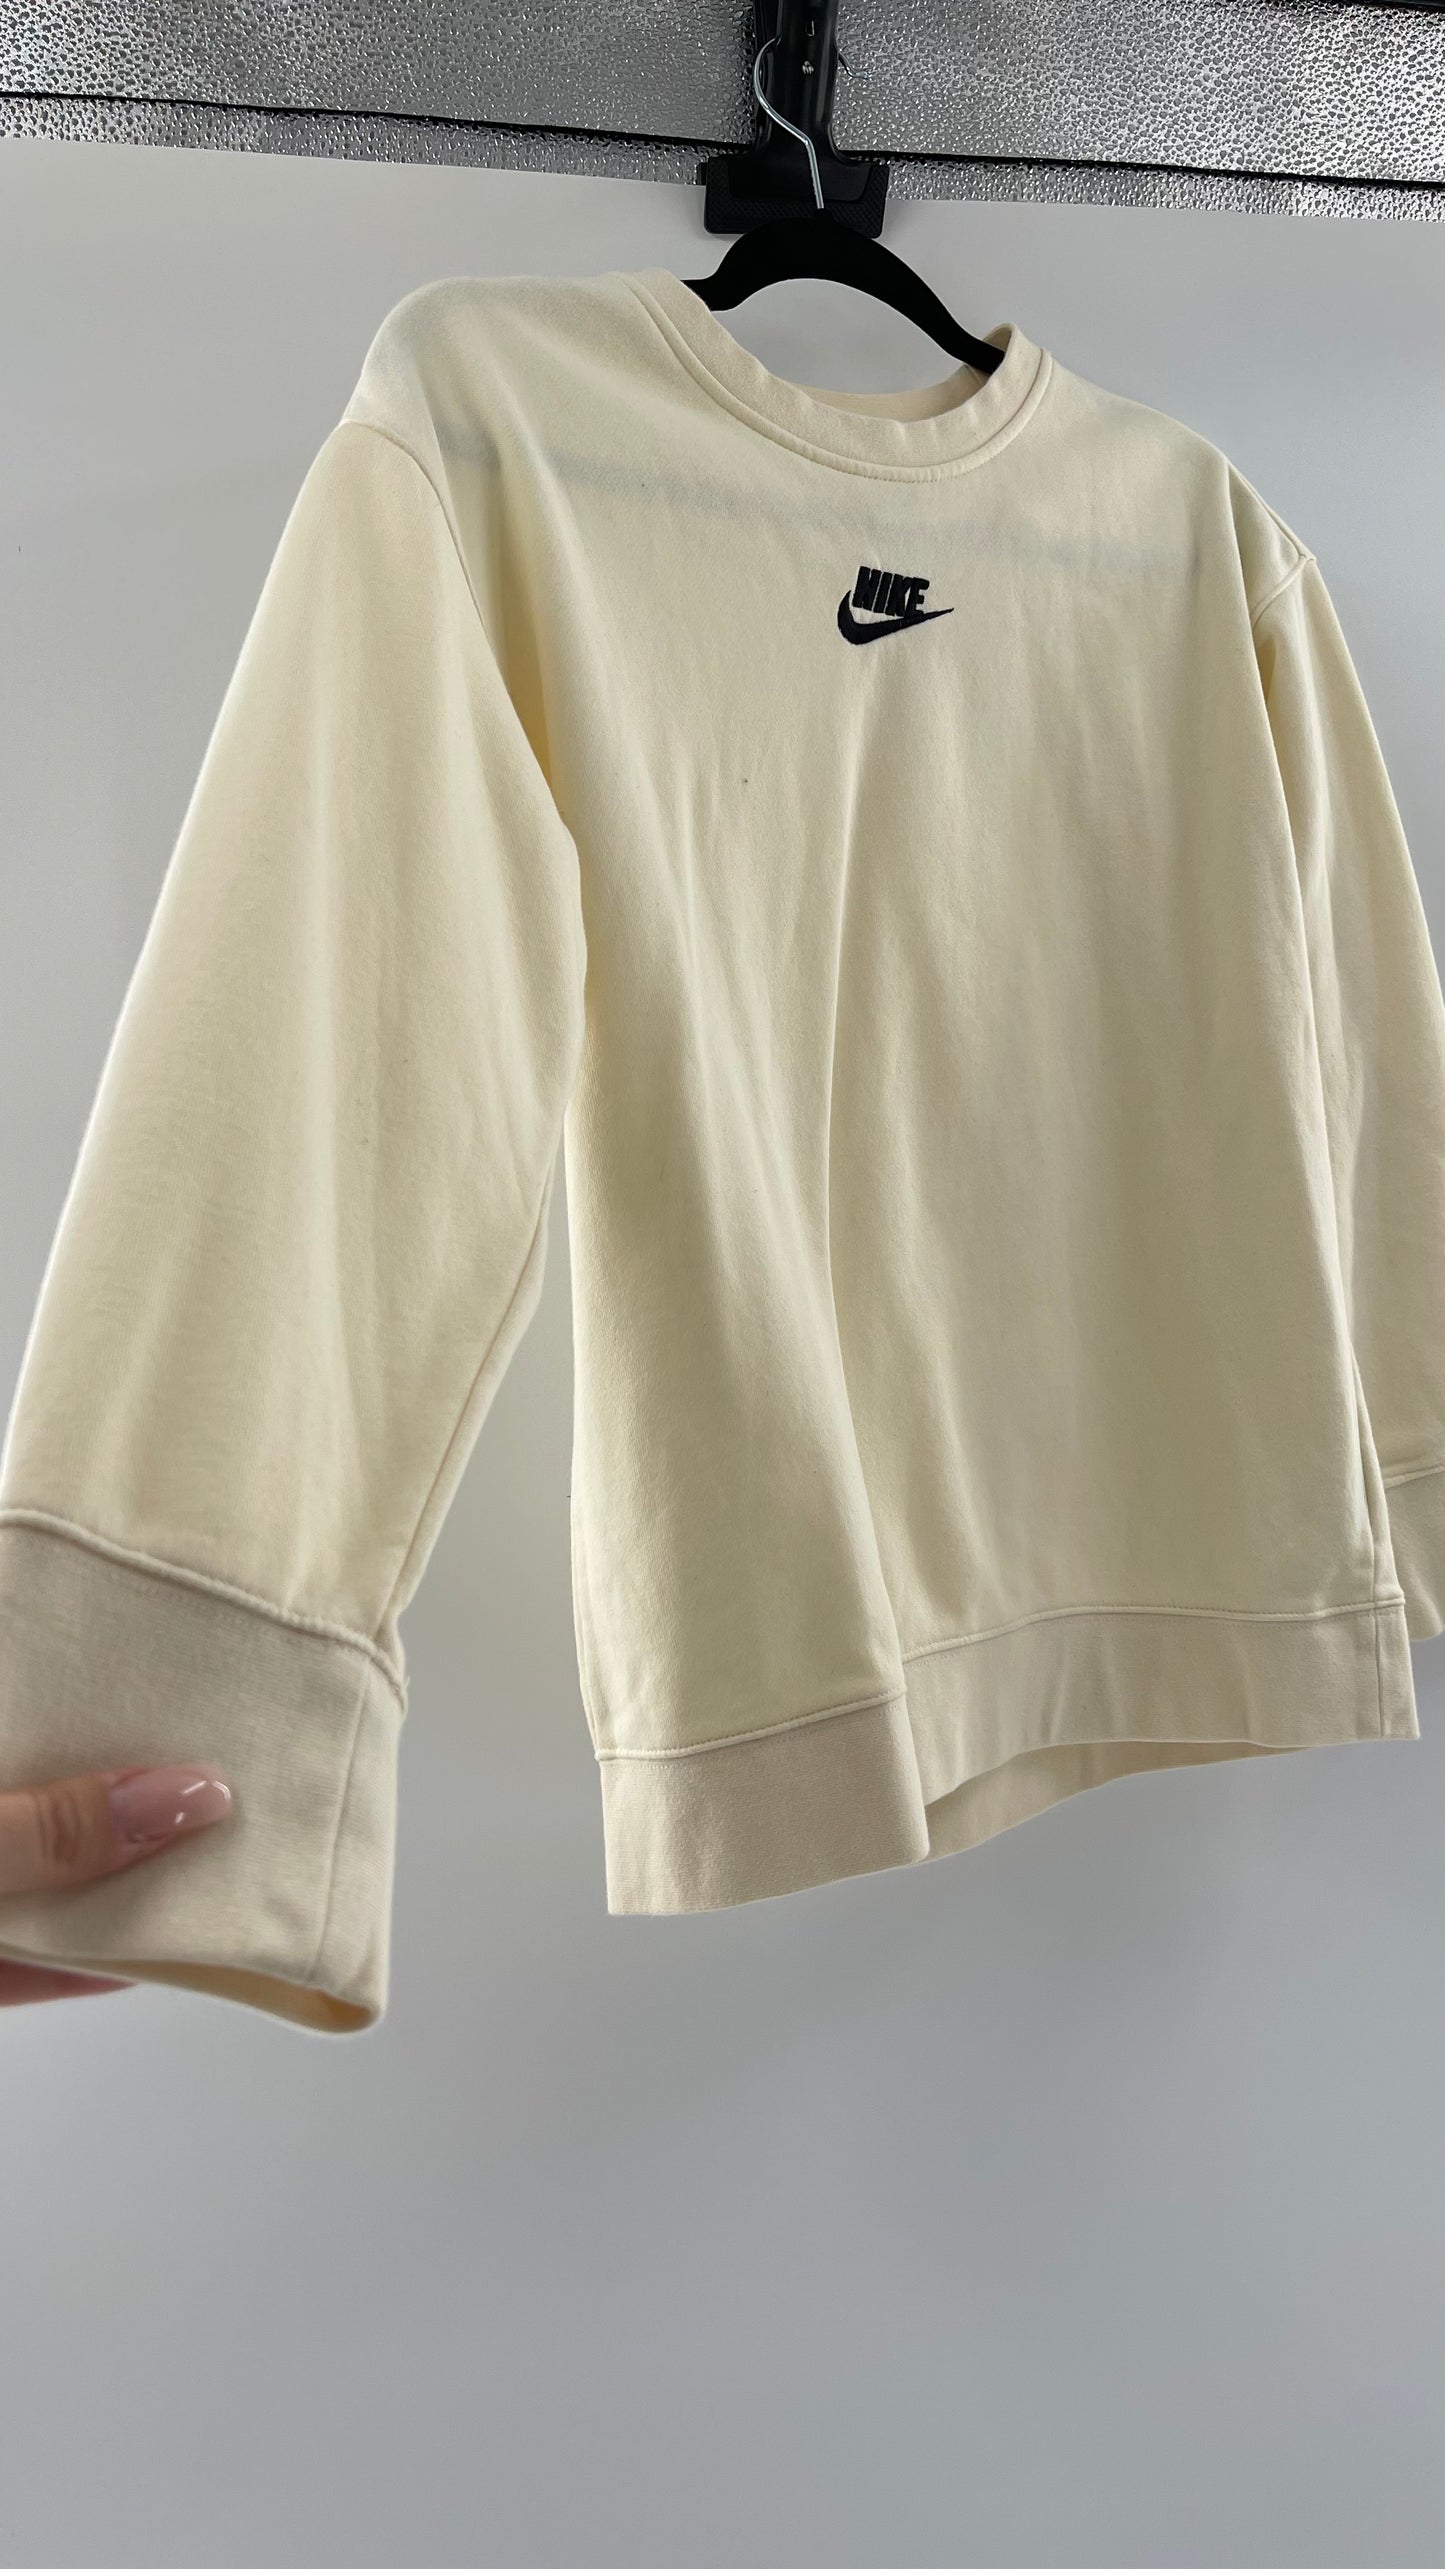 Cream Nike Crewneck with Minimalist Black Chest Logo (Large)